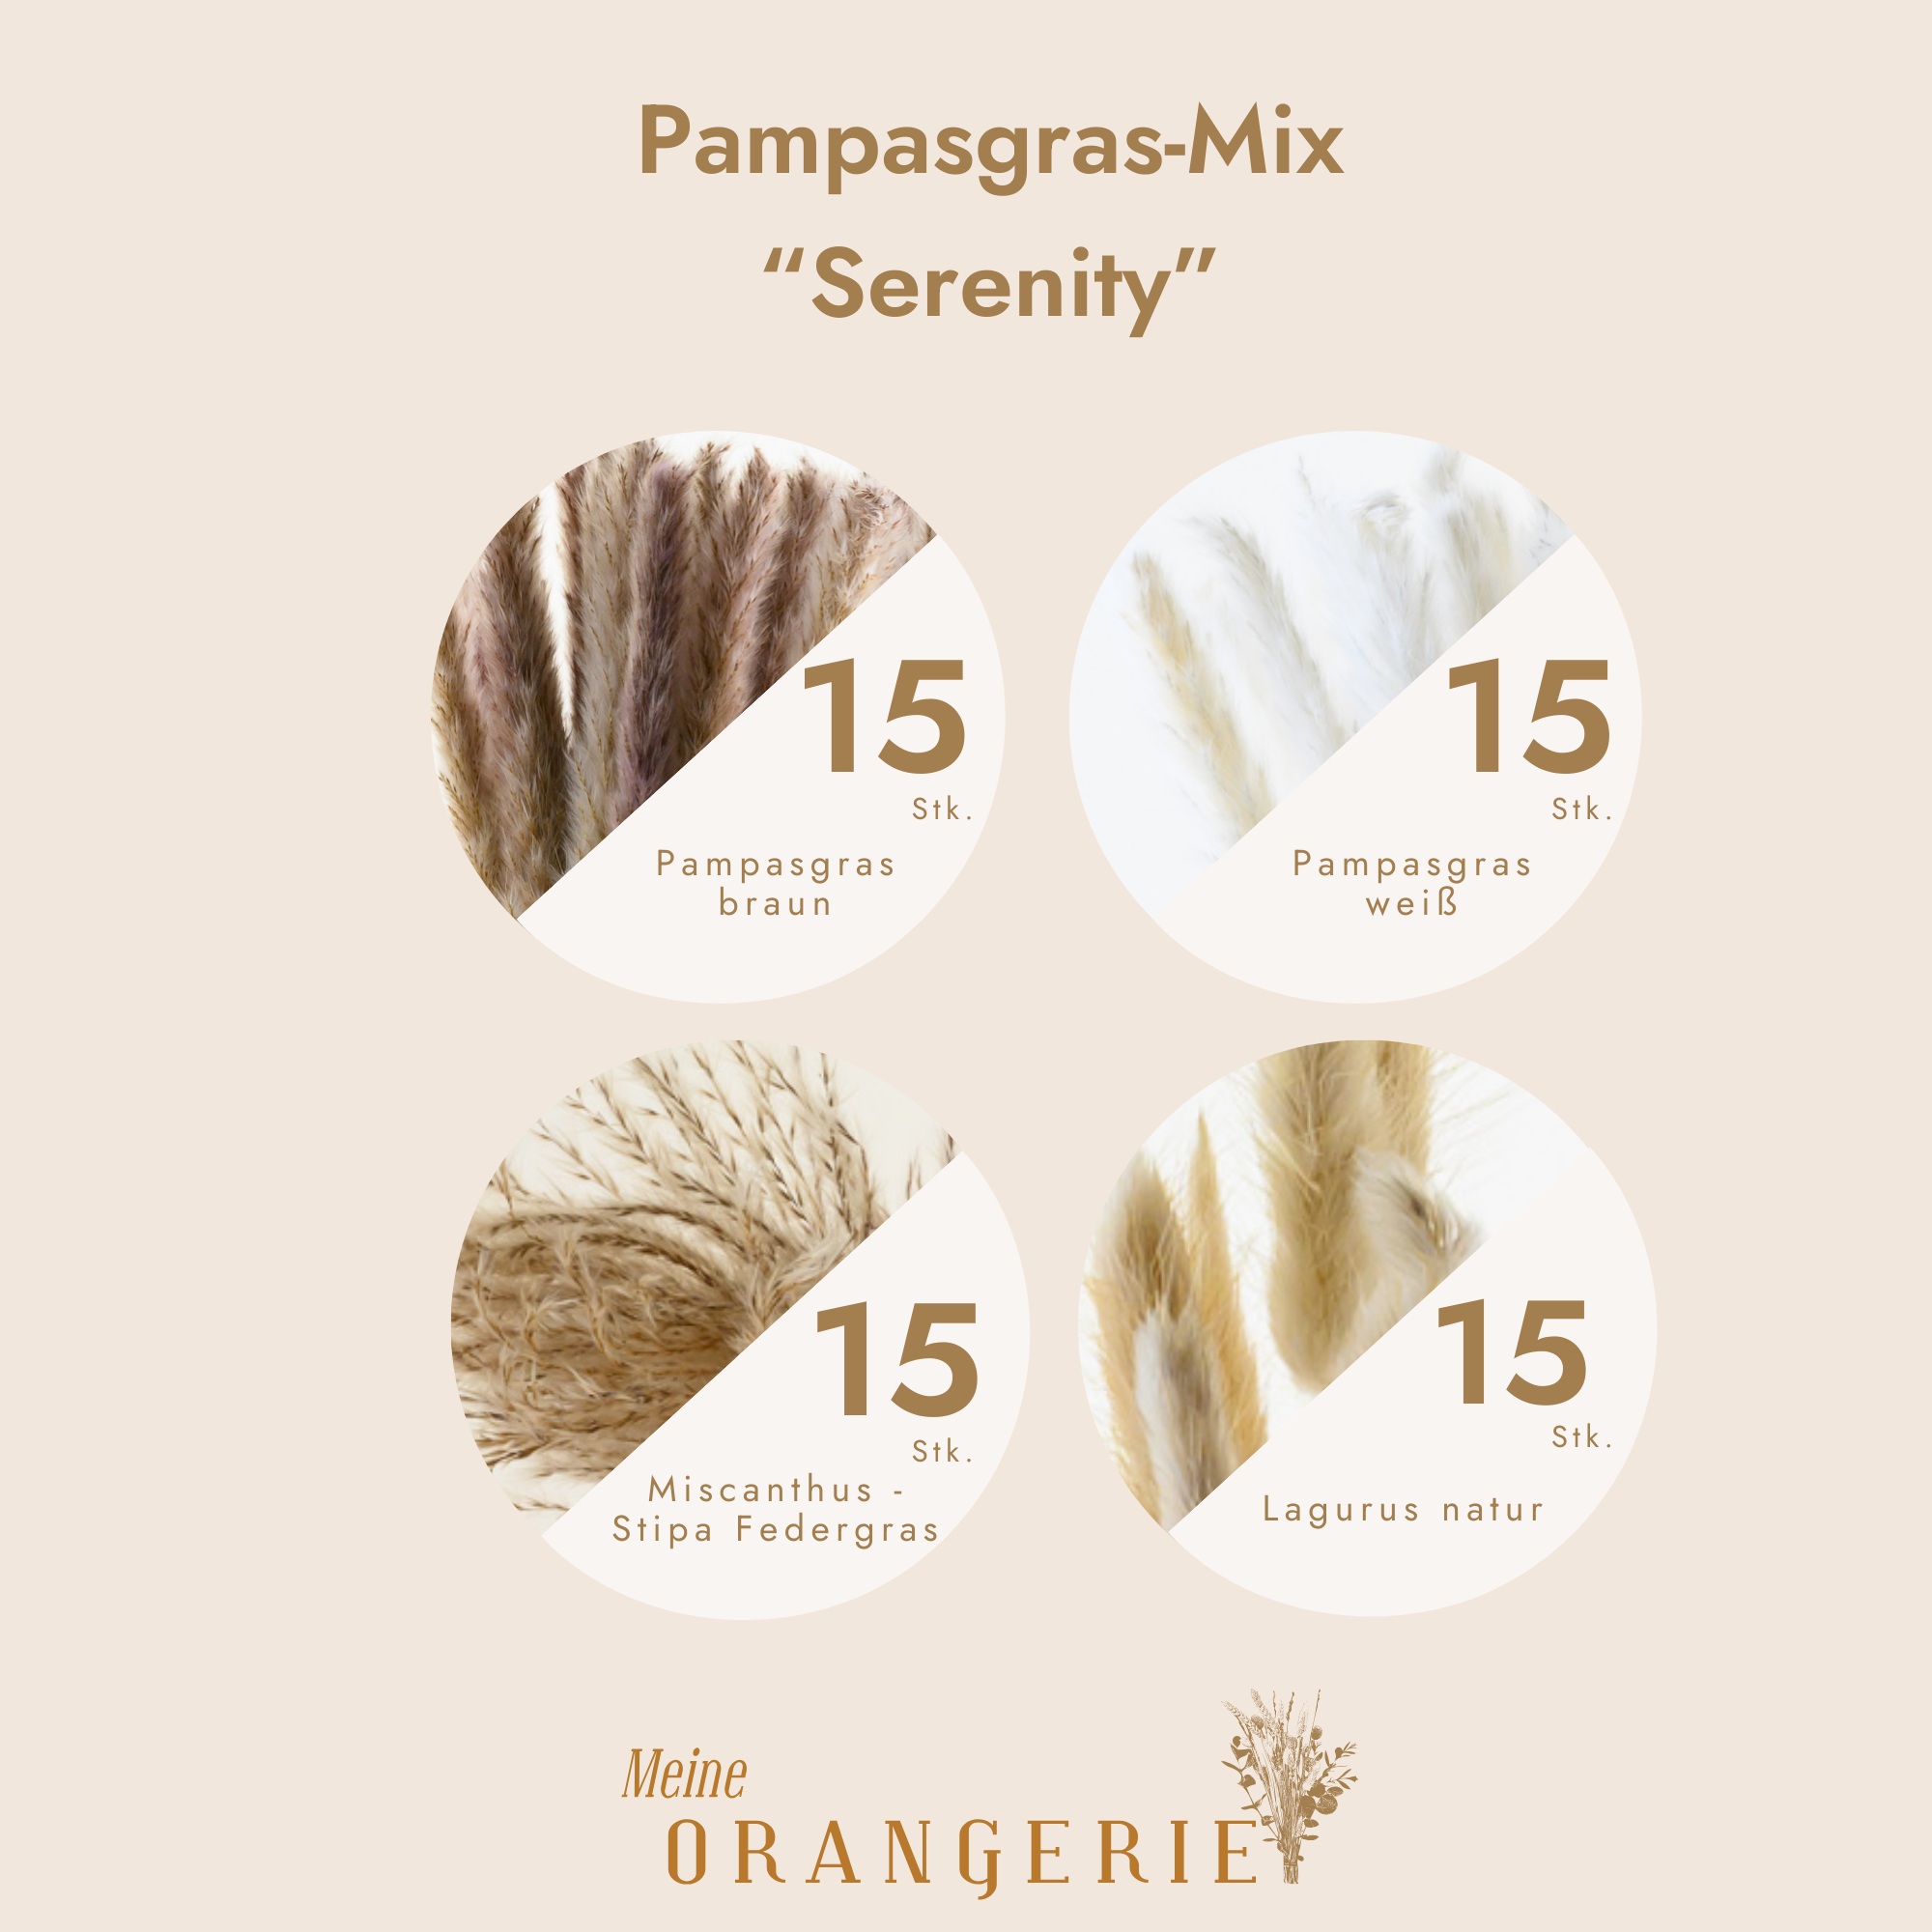 Pampasgras-Mix "Serenity"